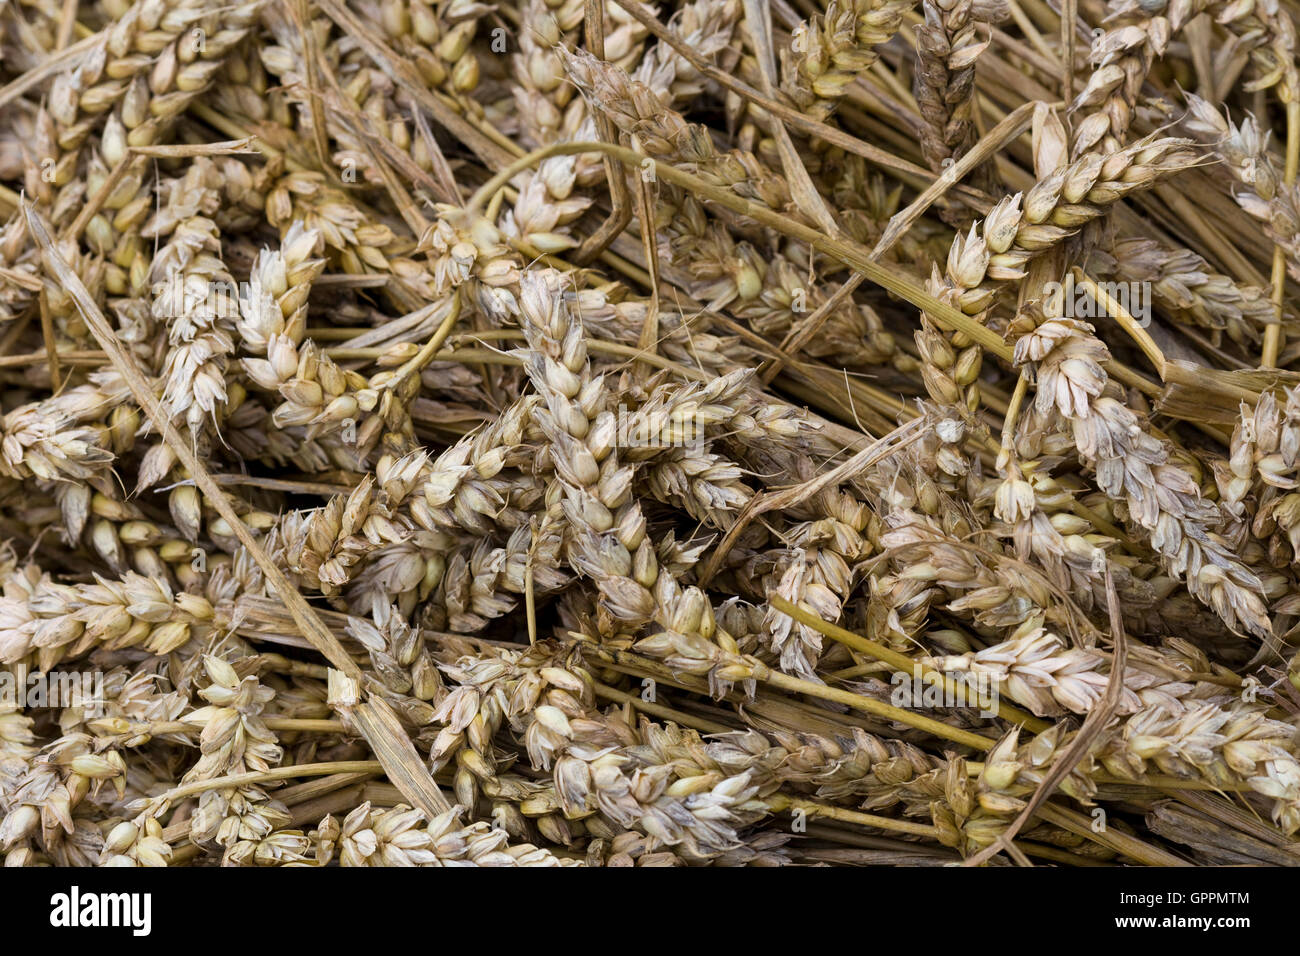 Common wheat -Fotos und -Bildmaterial in hoher Auflösung – Alamy